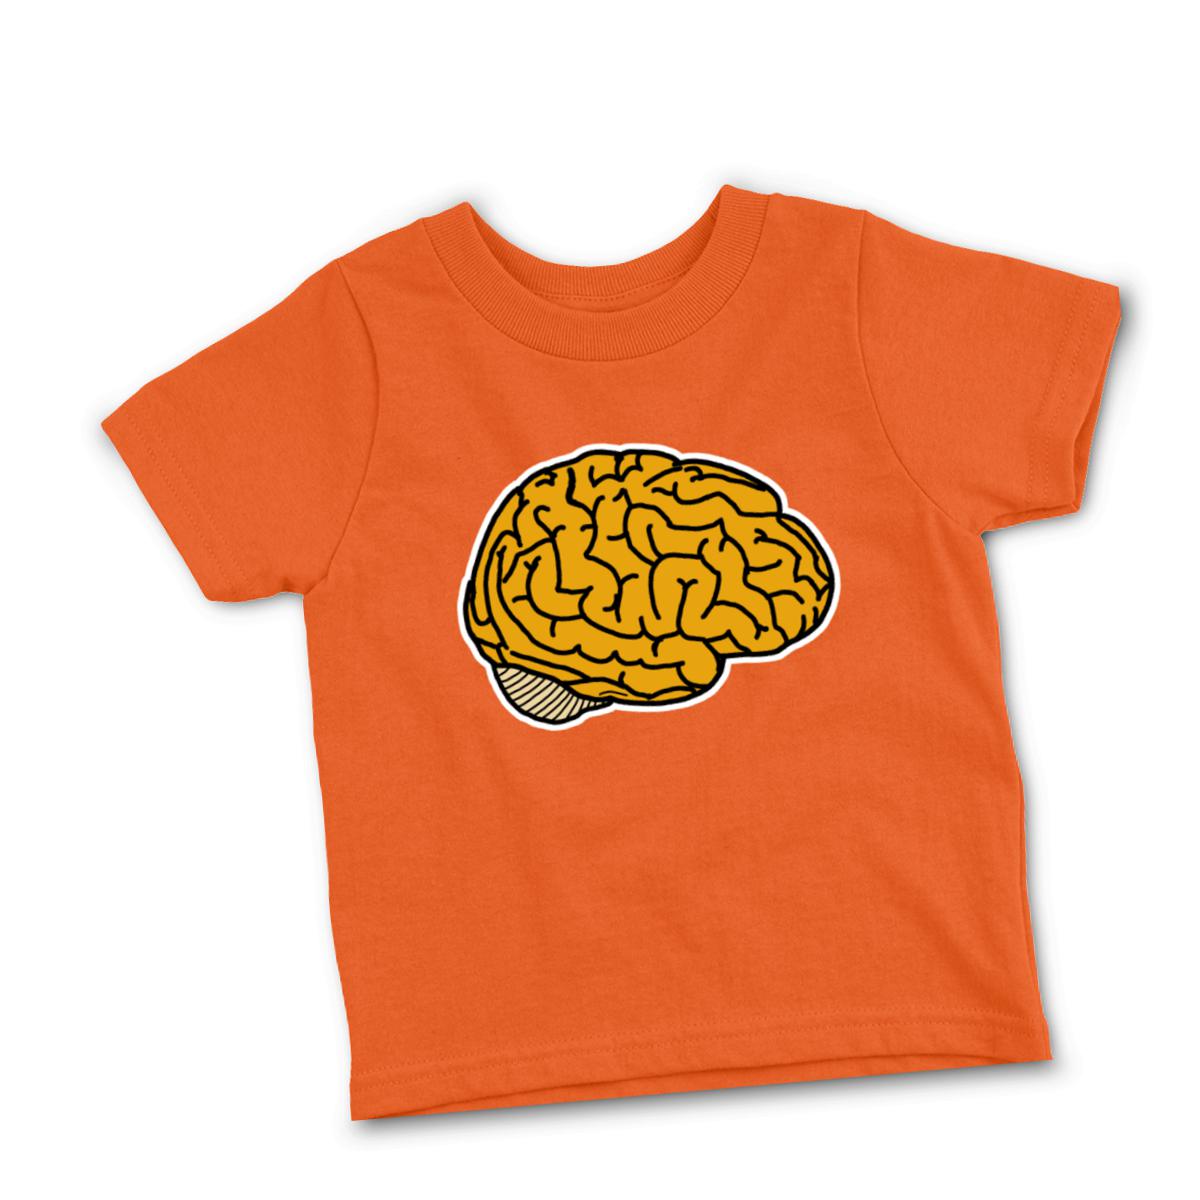 Illustrative Brain Infant Tee 18M orange